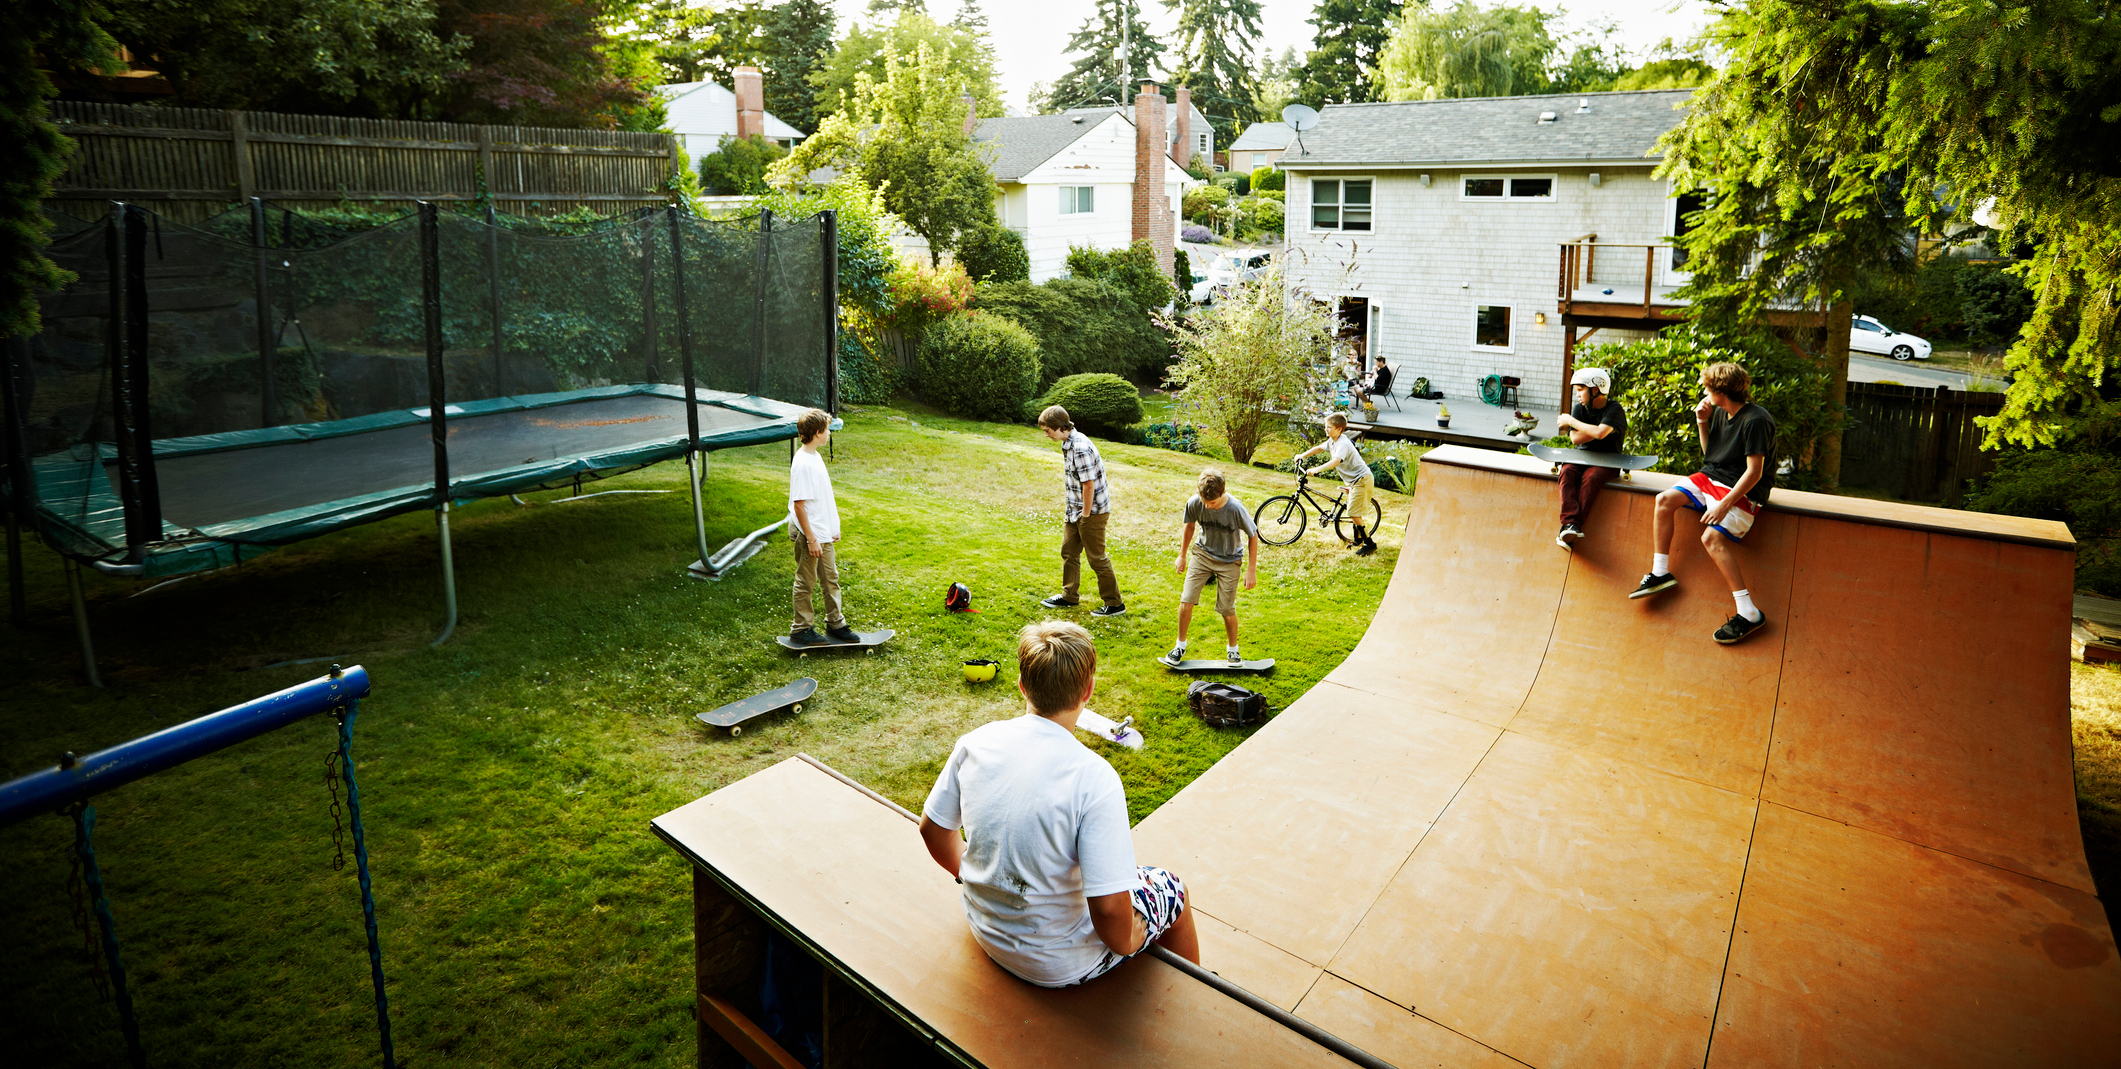 A group of kids create playing on a skateboard ramp in a neighborhood backyard.